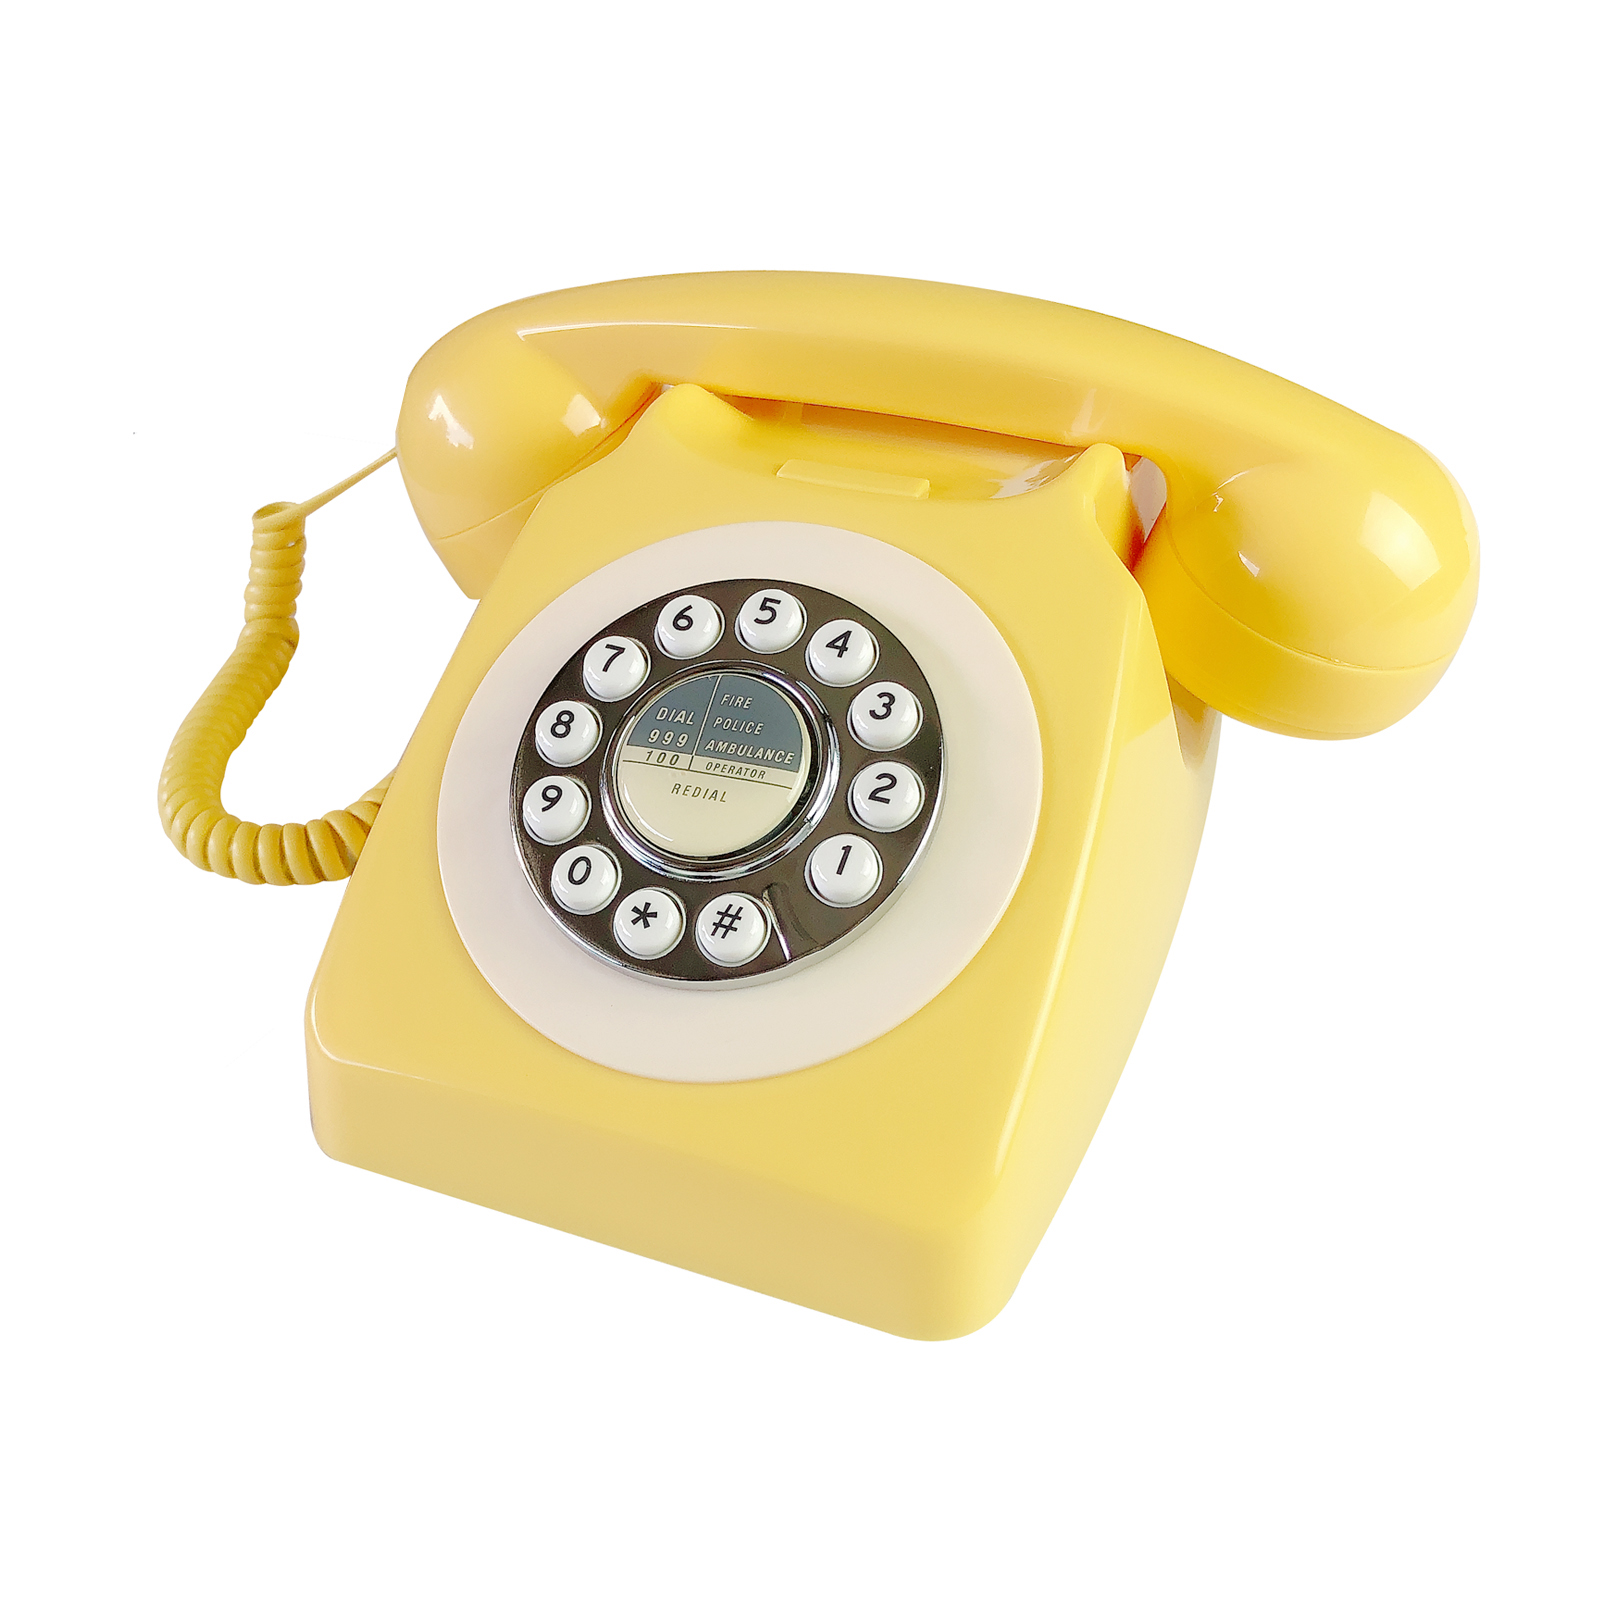  AWJ Teléfono fijo retro, clásico vintage antiguo botón marcado  teléfono con cable para uso en el hogar/oficina, conector de teléfono  estándar : Productos de Oficina